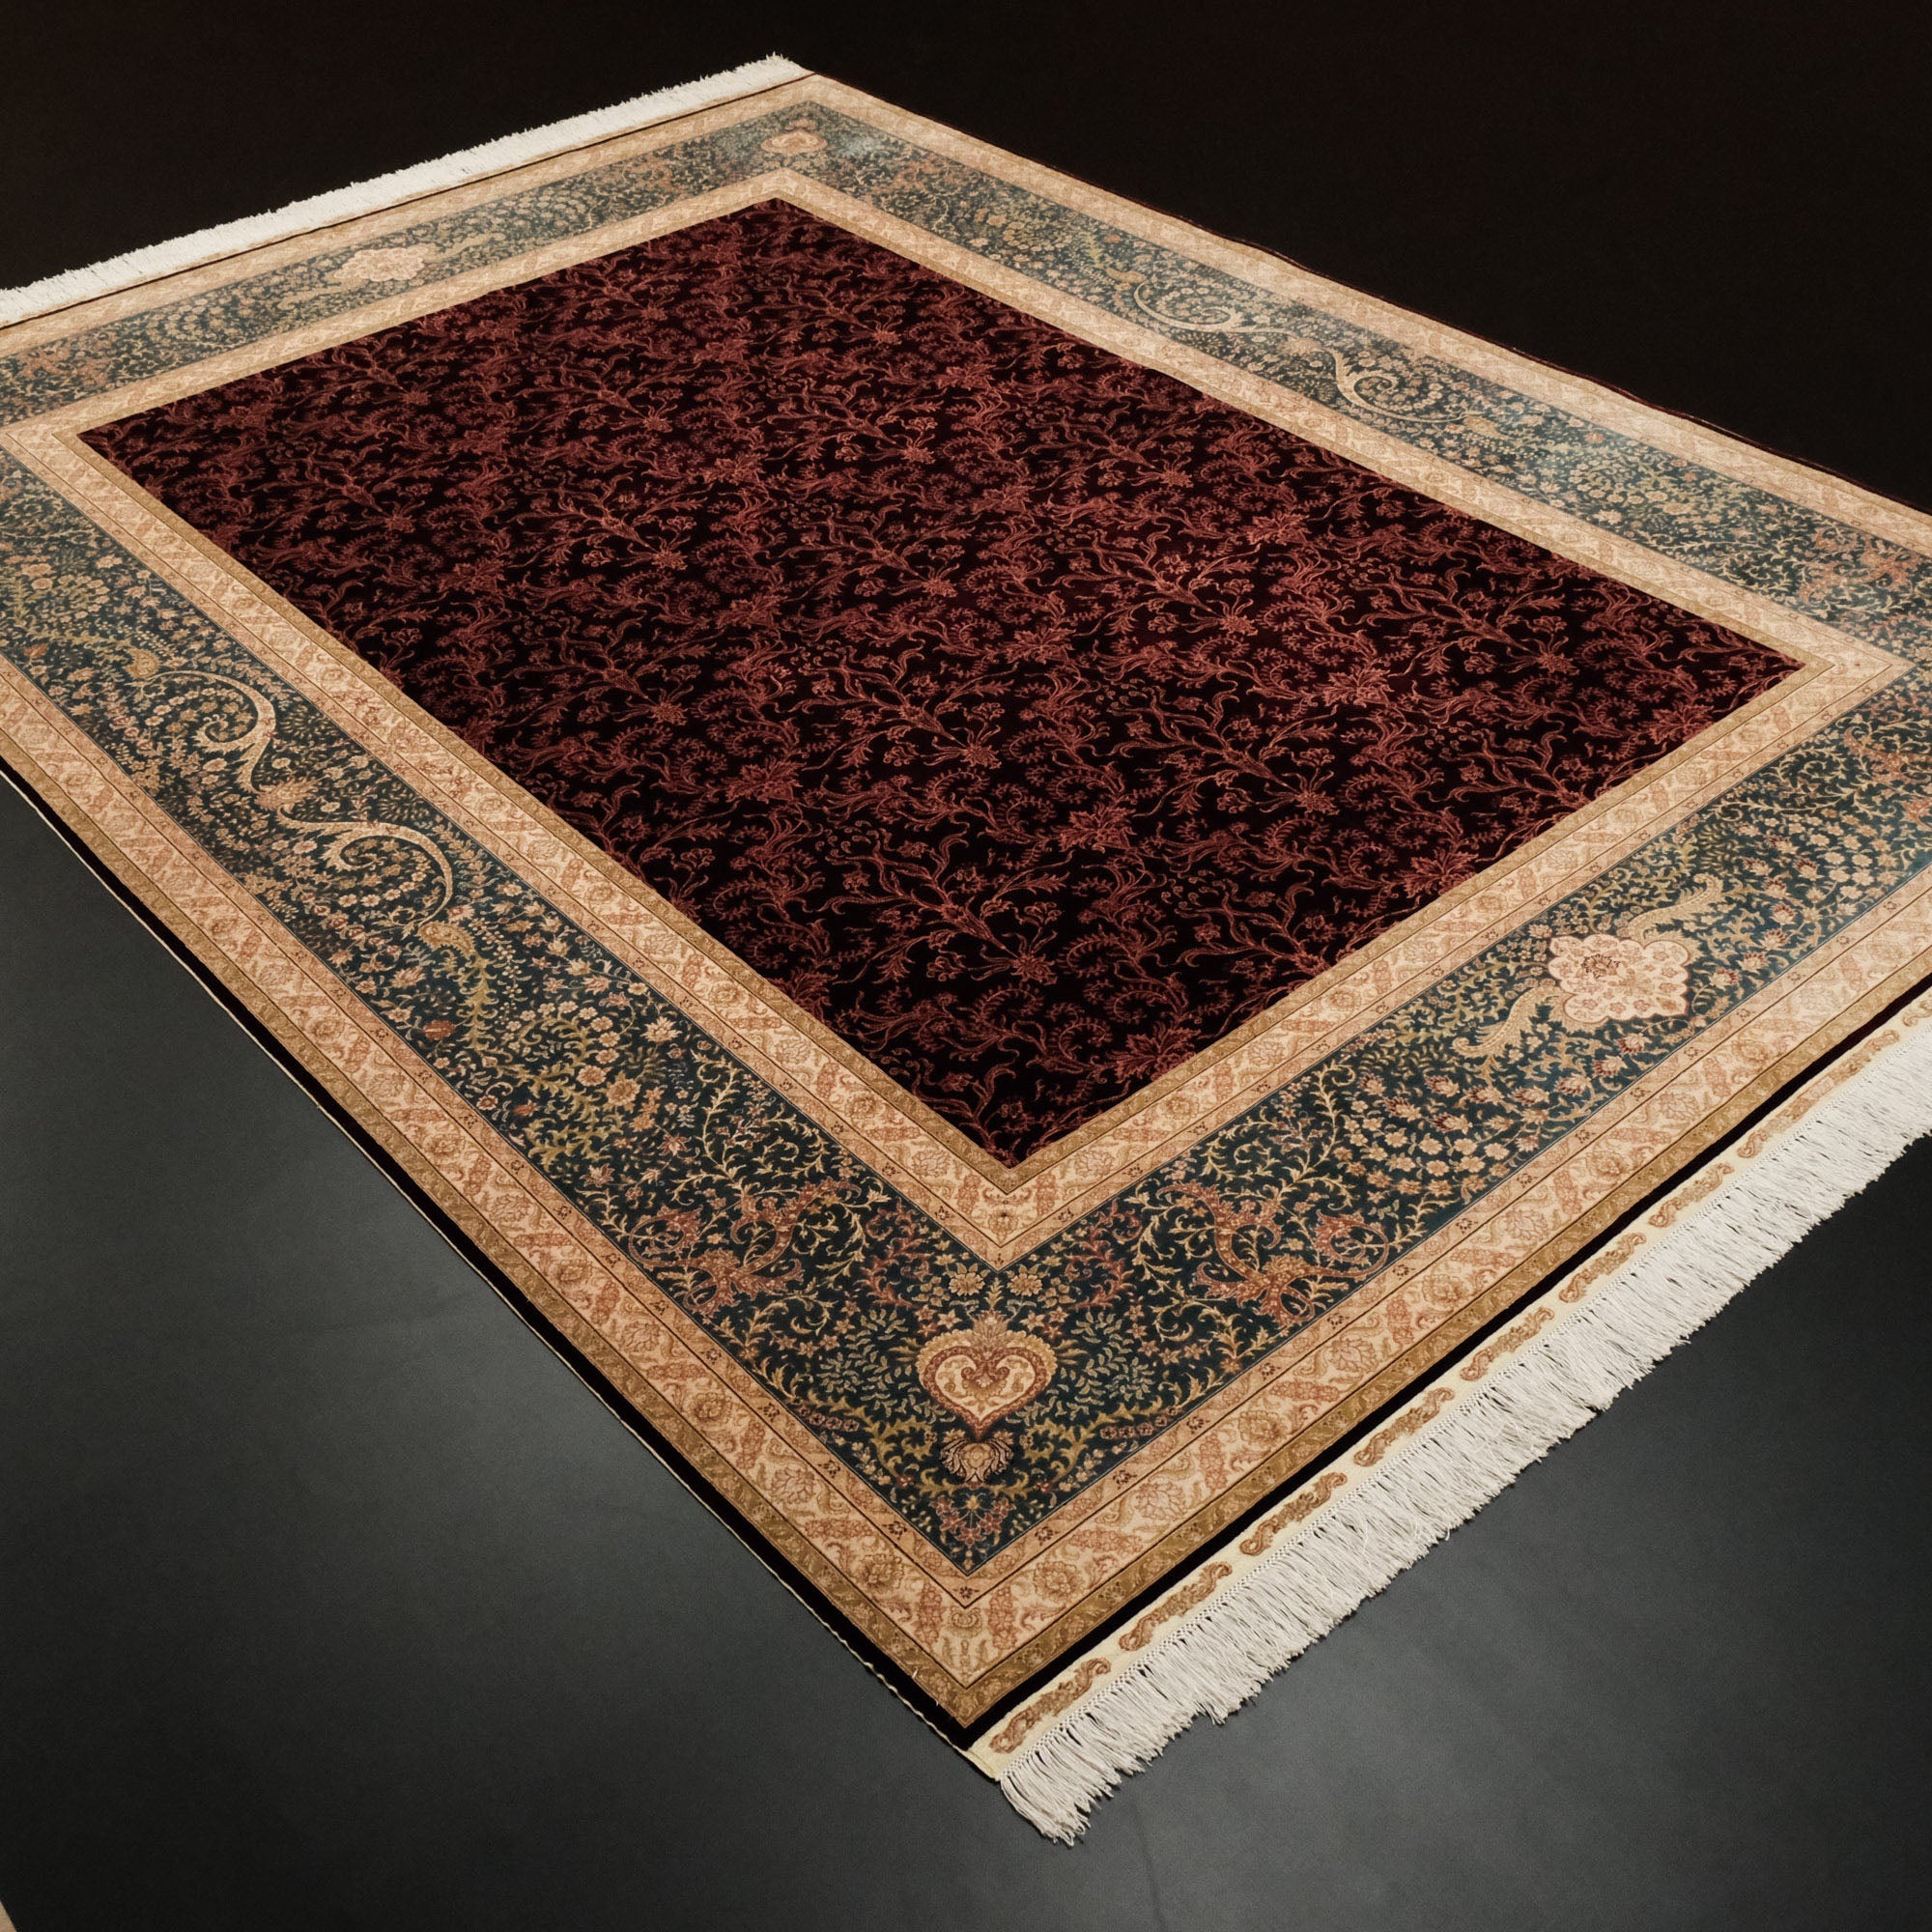 Frame Patterned Hand-Woven Claret Burgundy Classic Silk Carpet